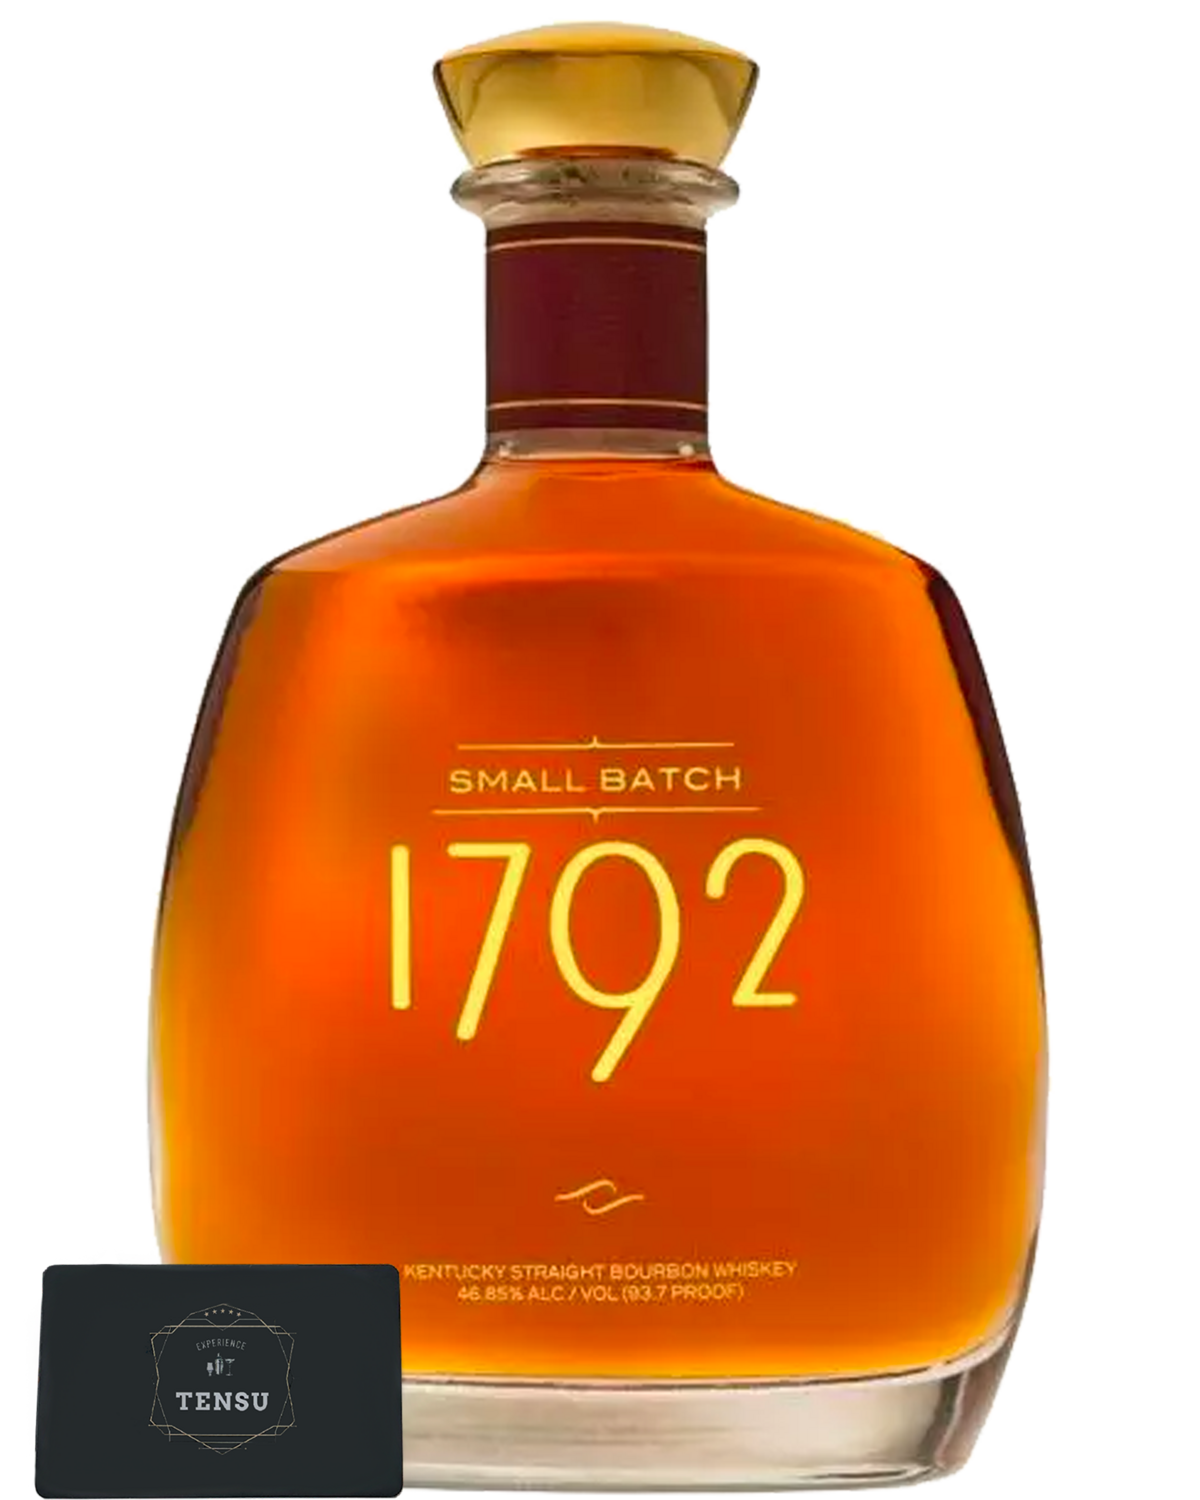 Ridgemont -1792- Small Batch Kentucky Straight Bourbon Whiskey 46.85 "OB"